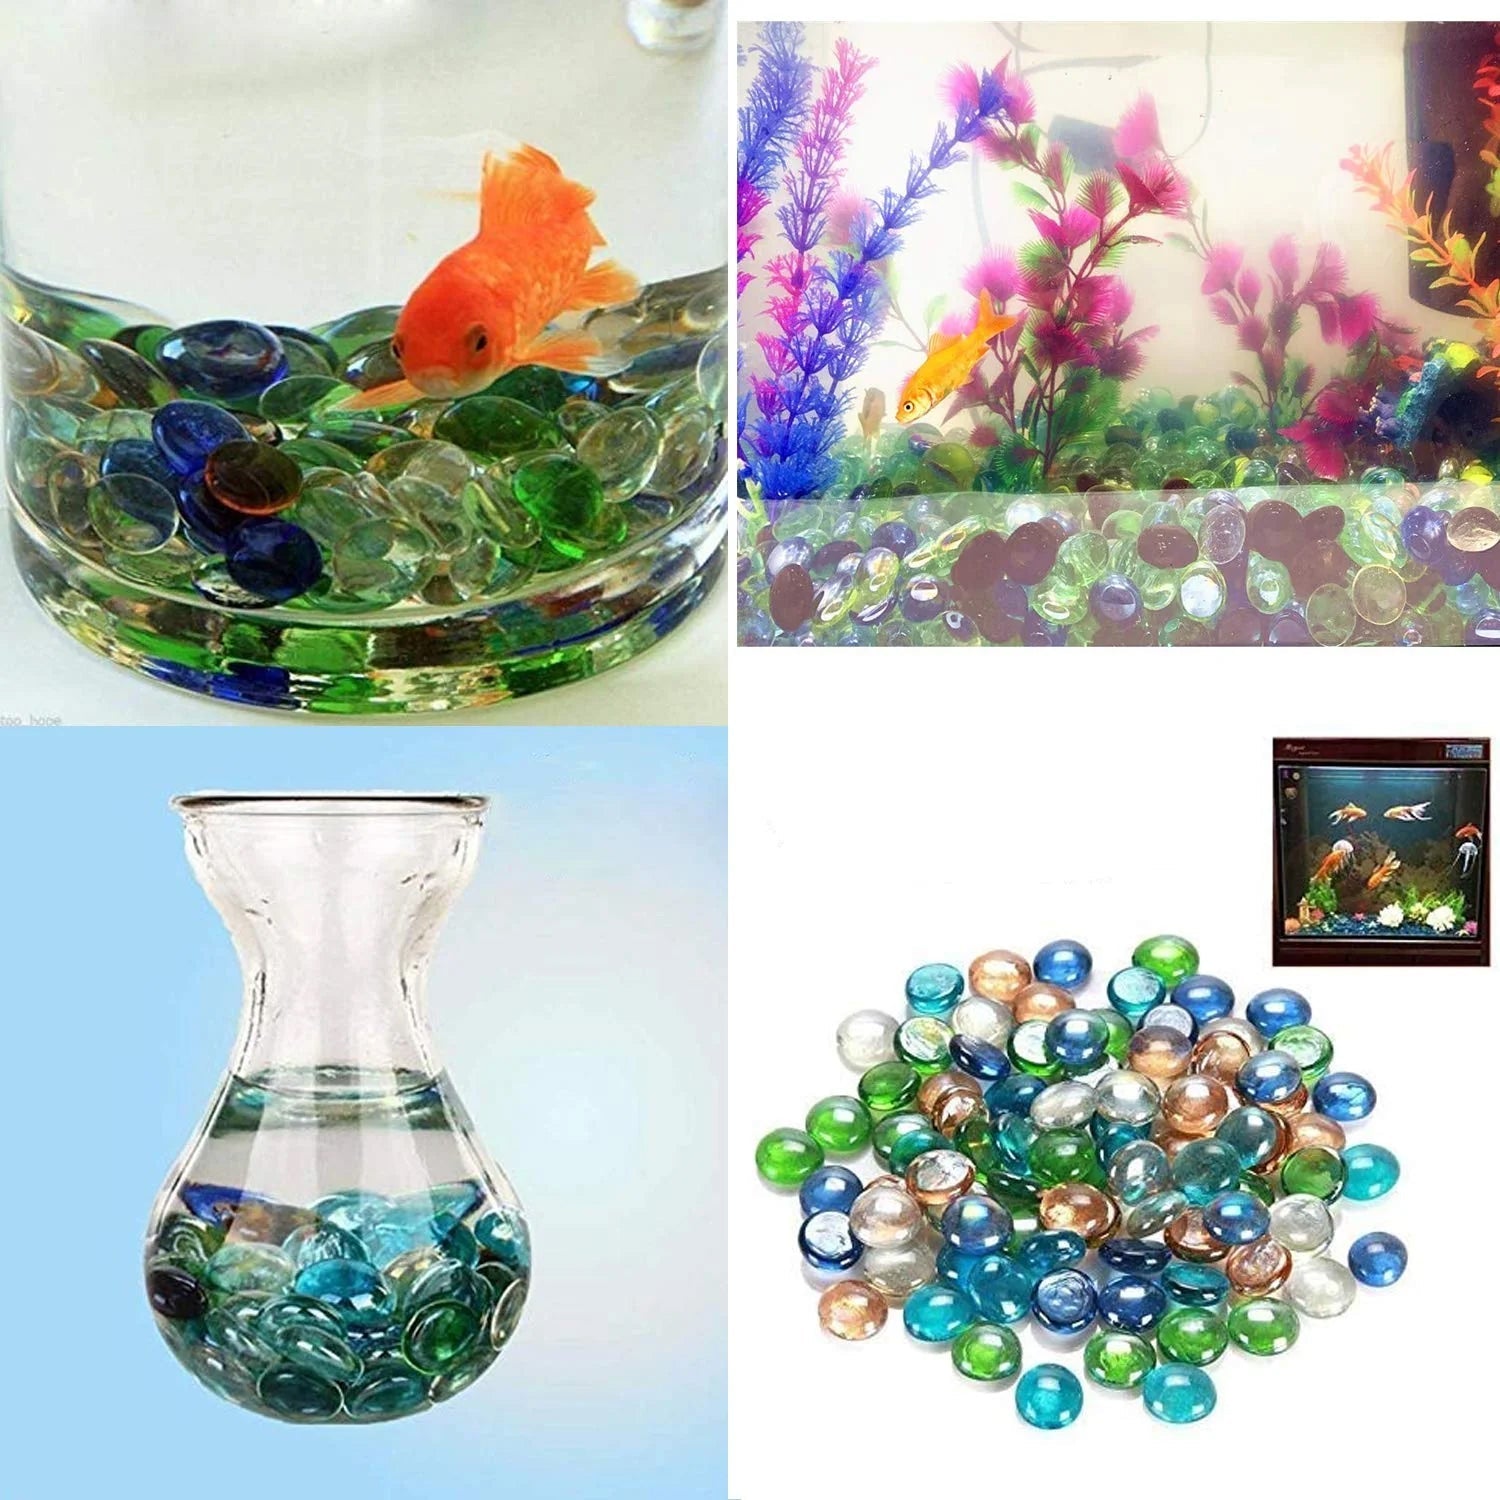 17802 Multi-Color Decorative Stone for Garden / Lawn / Aquarium Fish Tank Gravel / Flower Pots Decoration Pebbles for Fish Bowl & All Purpose Attractive Stone Set